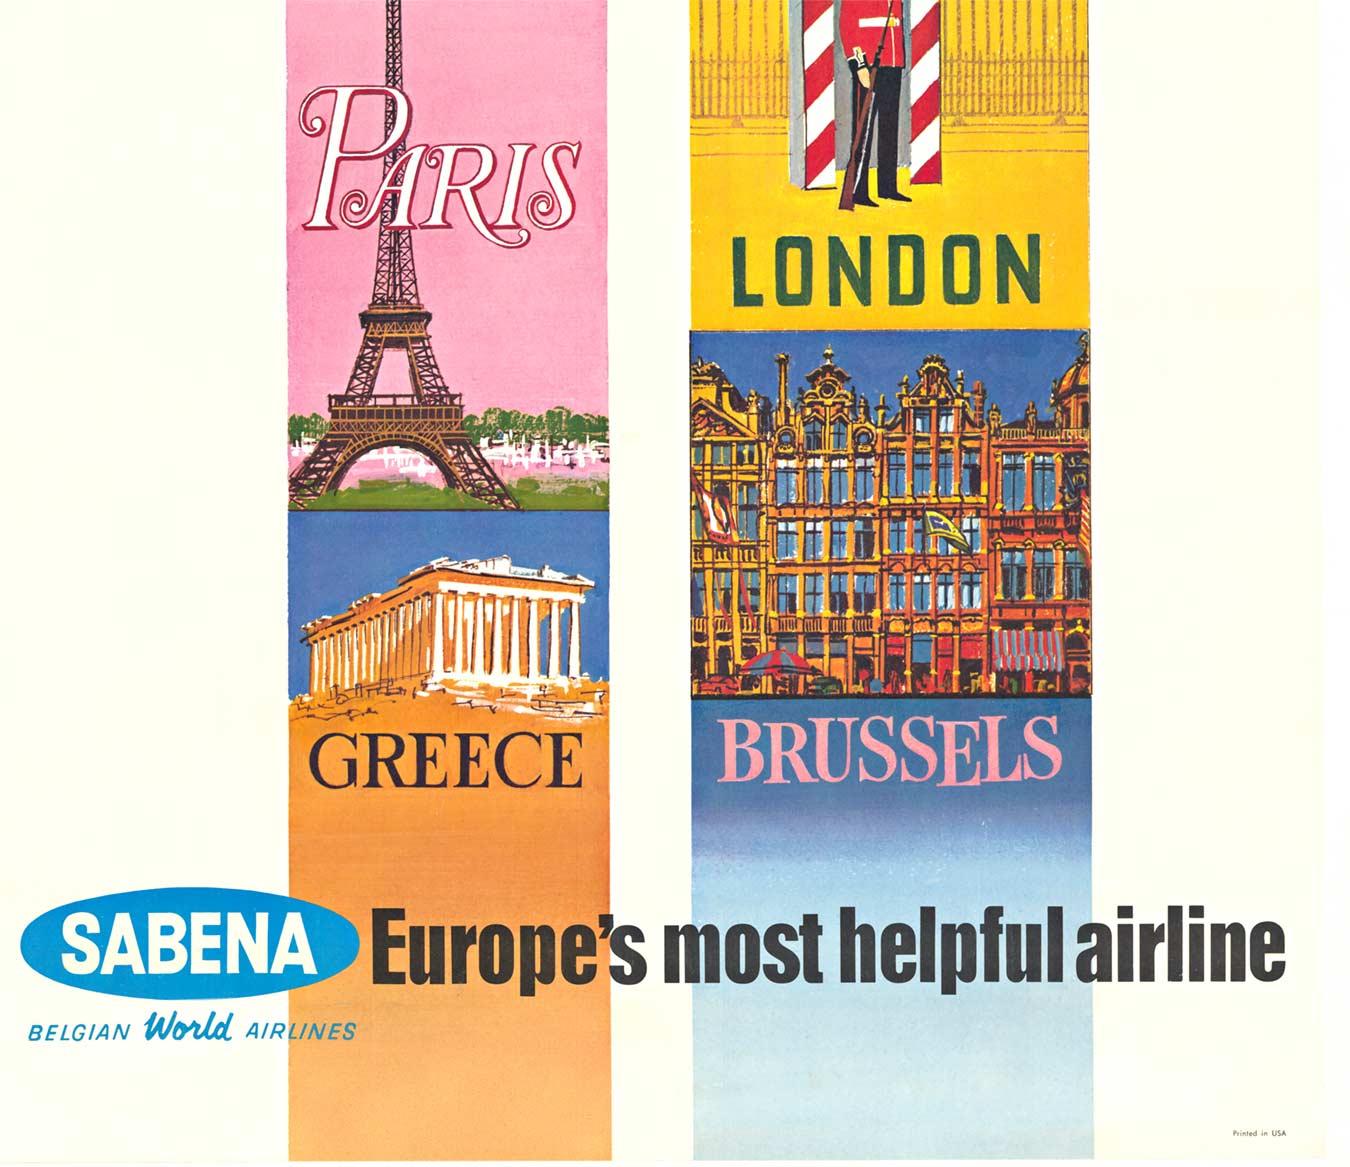 SABENA Belgian World Airways - Europe's most helpful airline - American Modern Print by Unknown